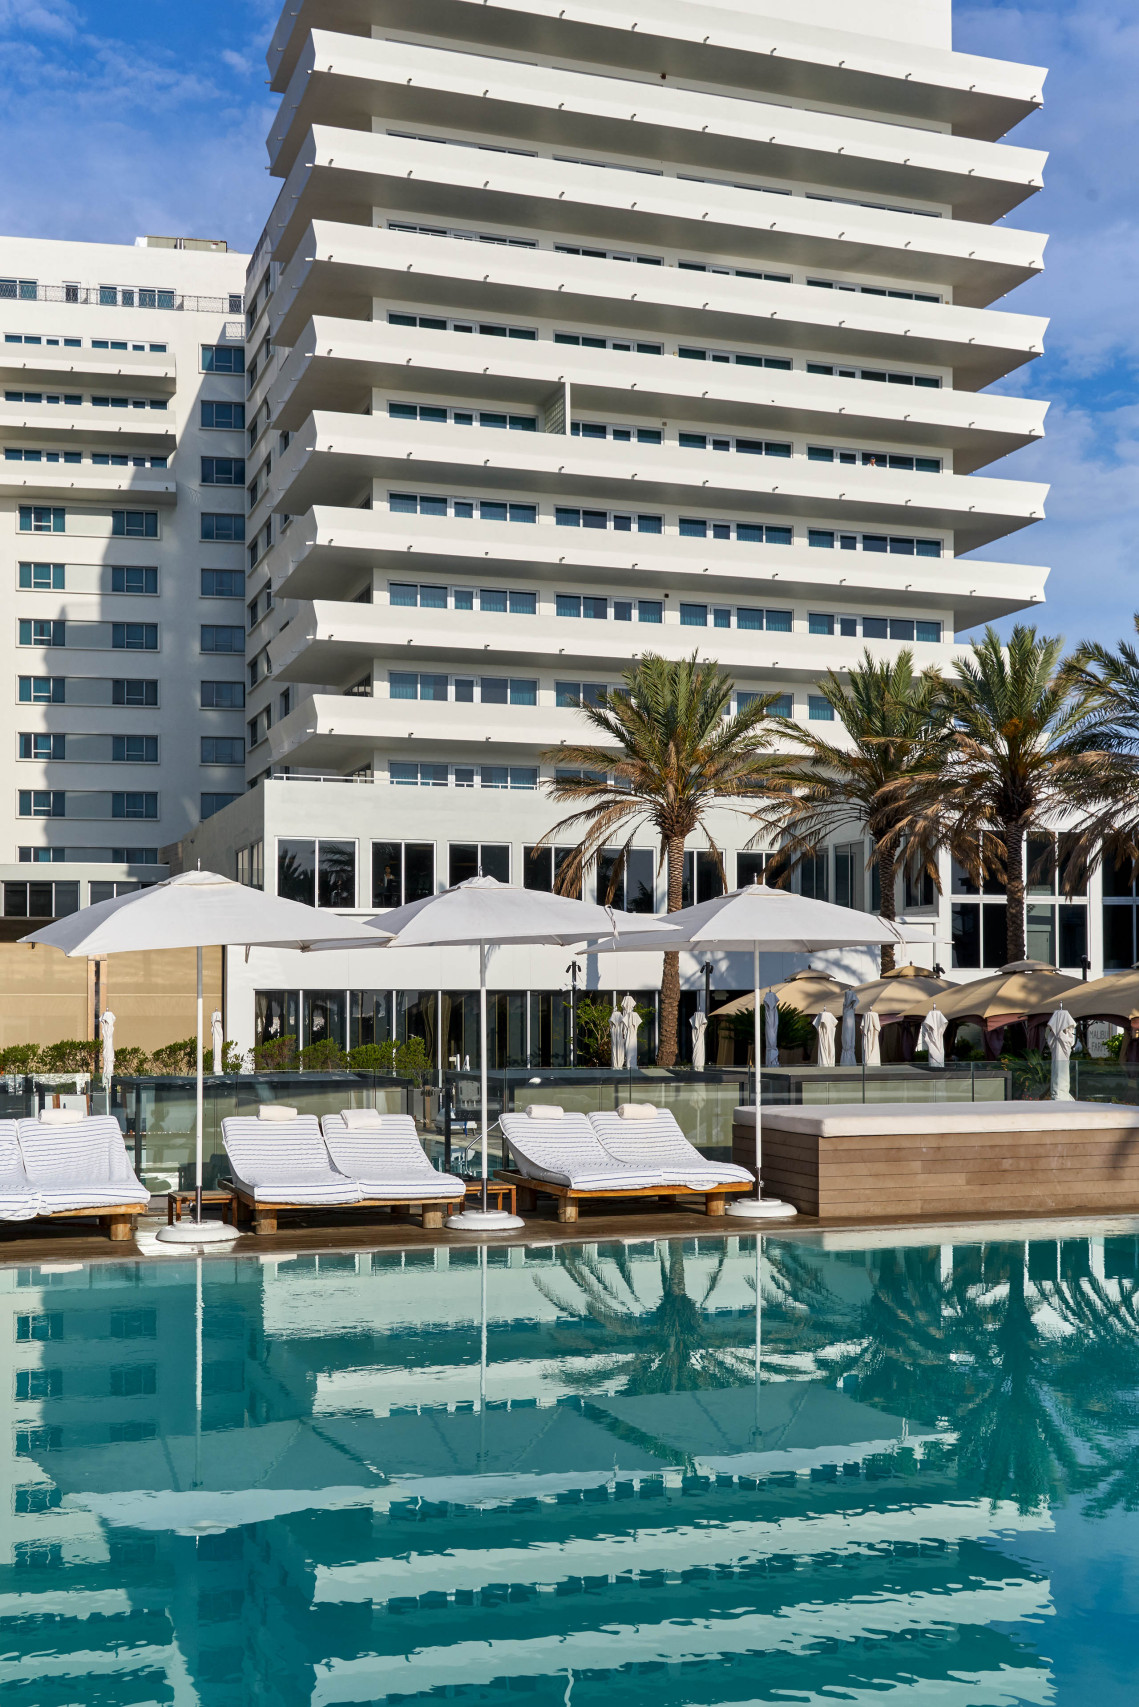 Nobu Hotel, Miami Beach